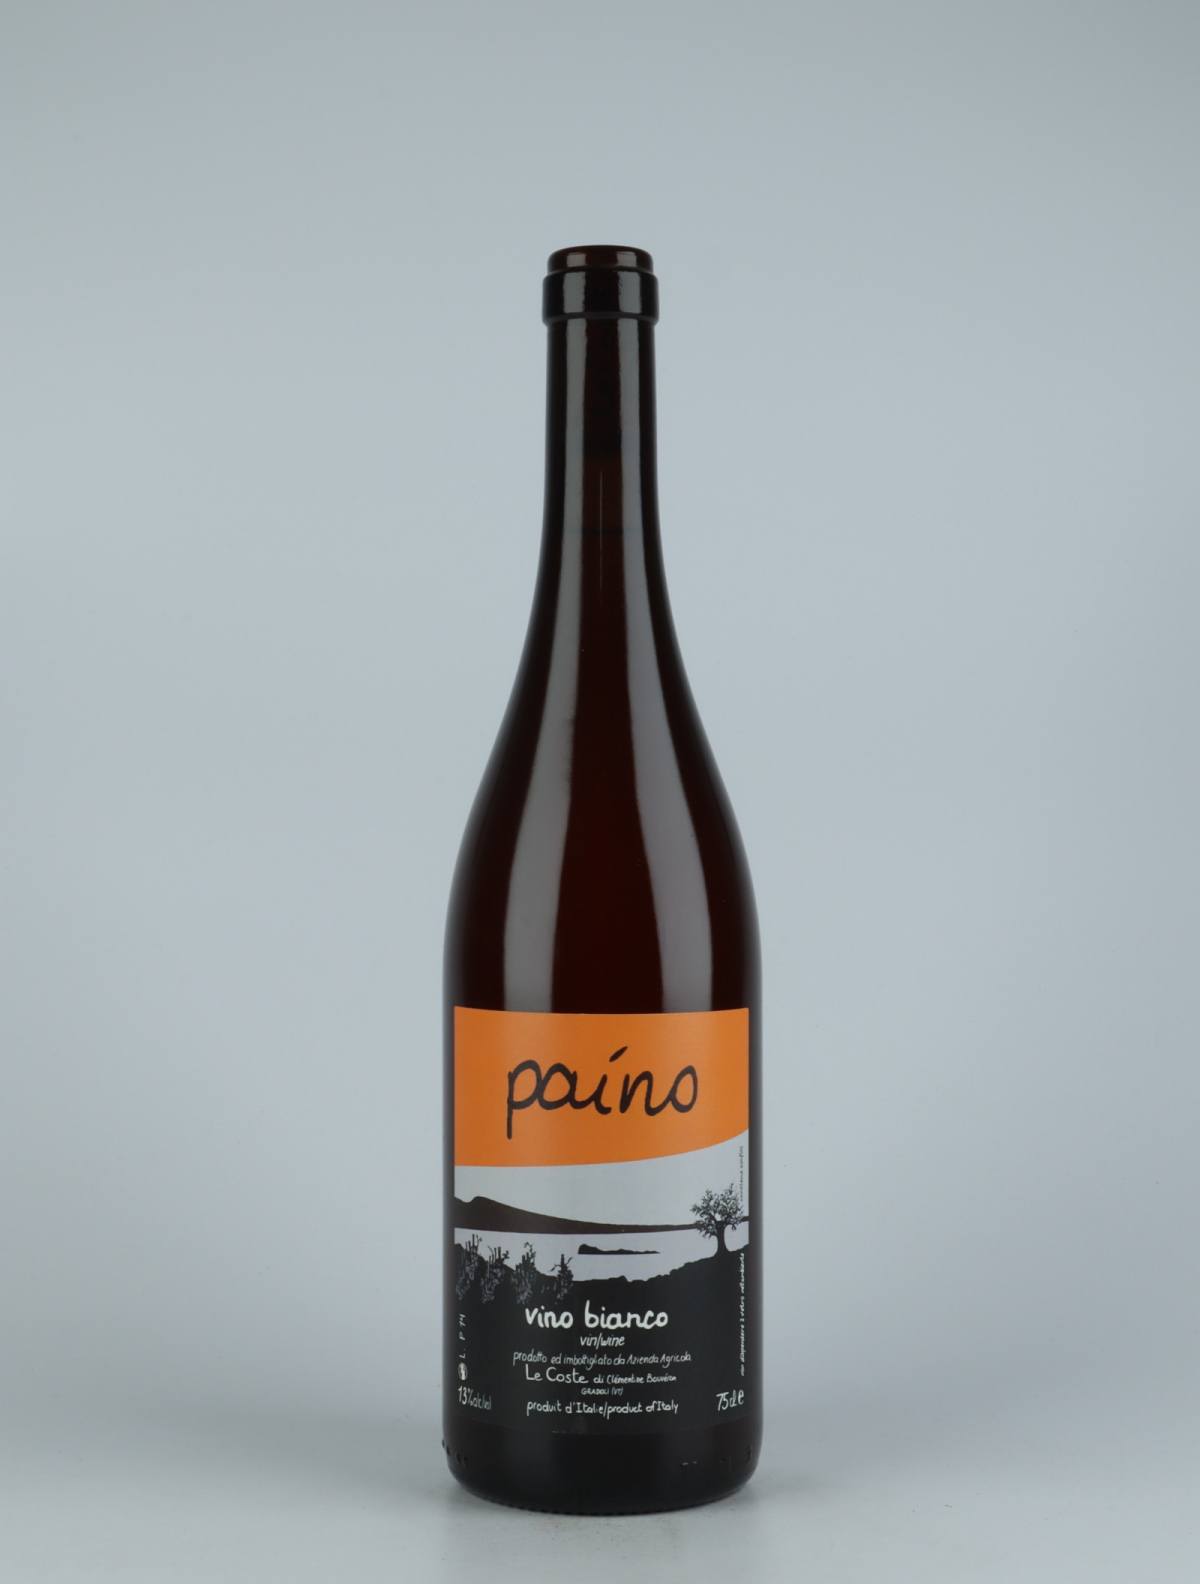 A bottle 2014 Paino Bianco Orange wine from Le Coste, Lazio in Italy